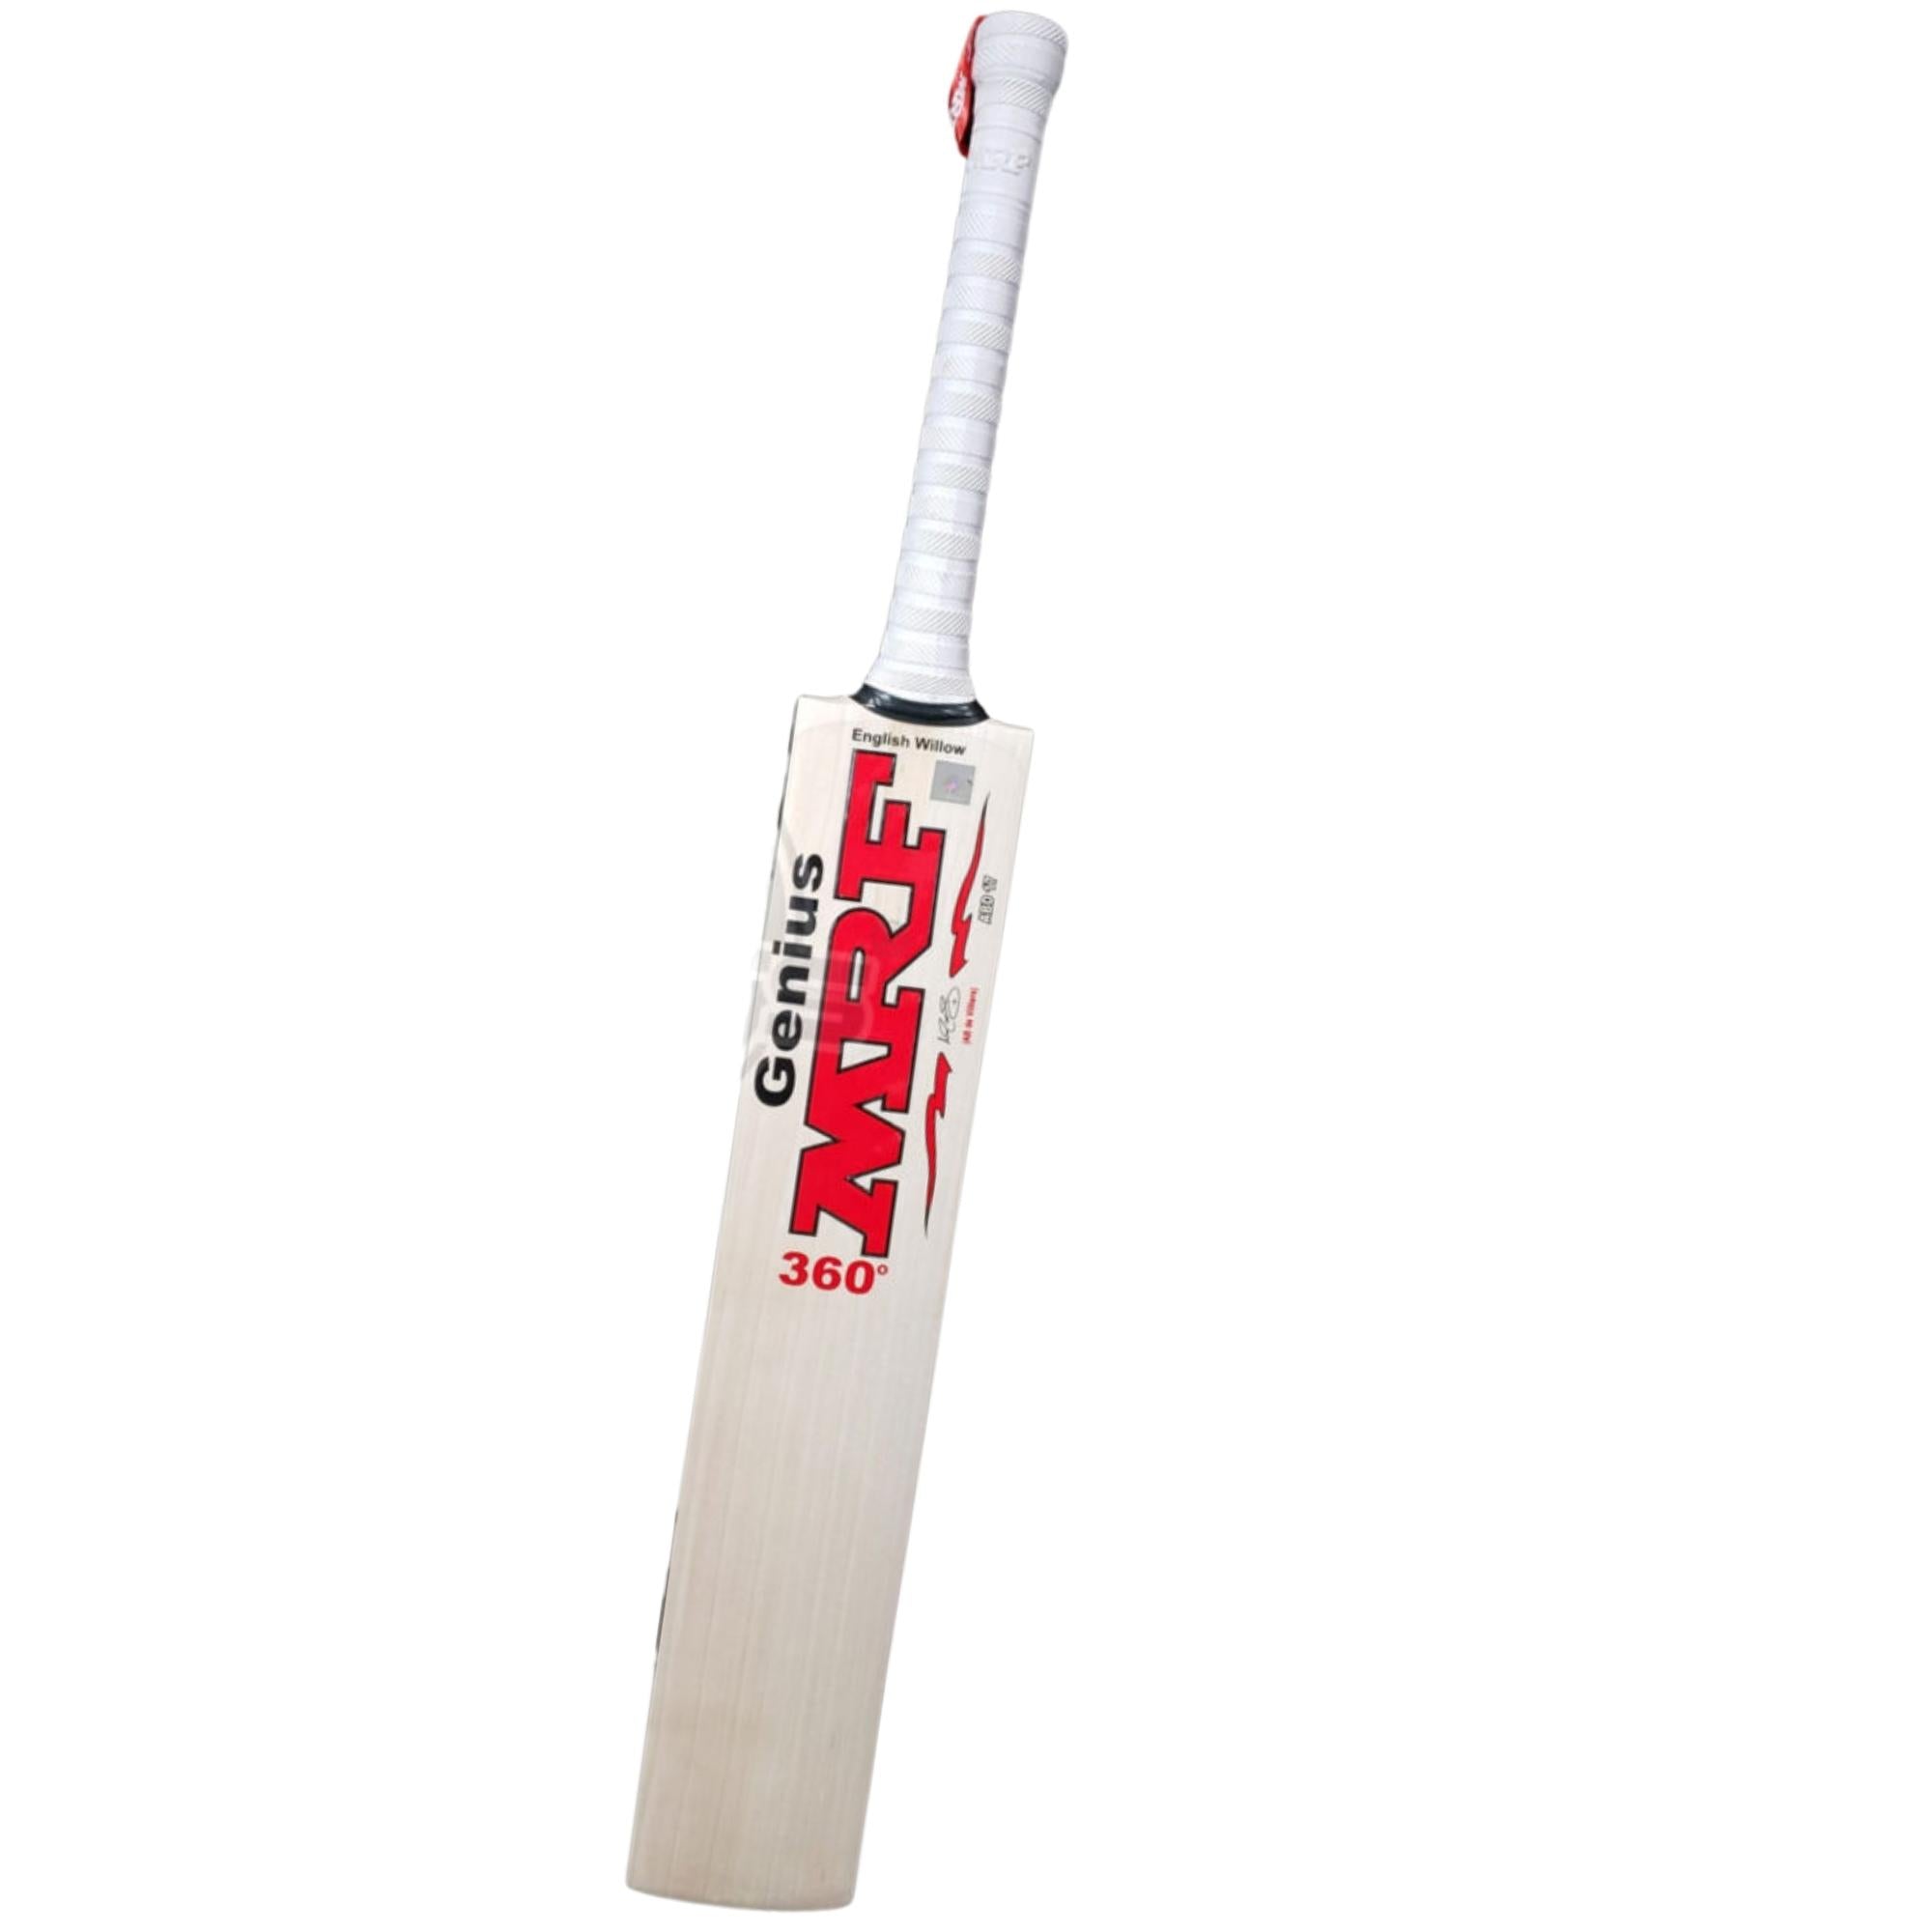 MRF Cricket Bat 360 - AB de Villiers Player's English Willow